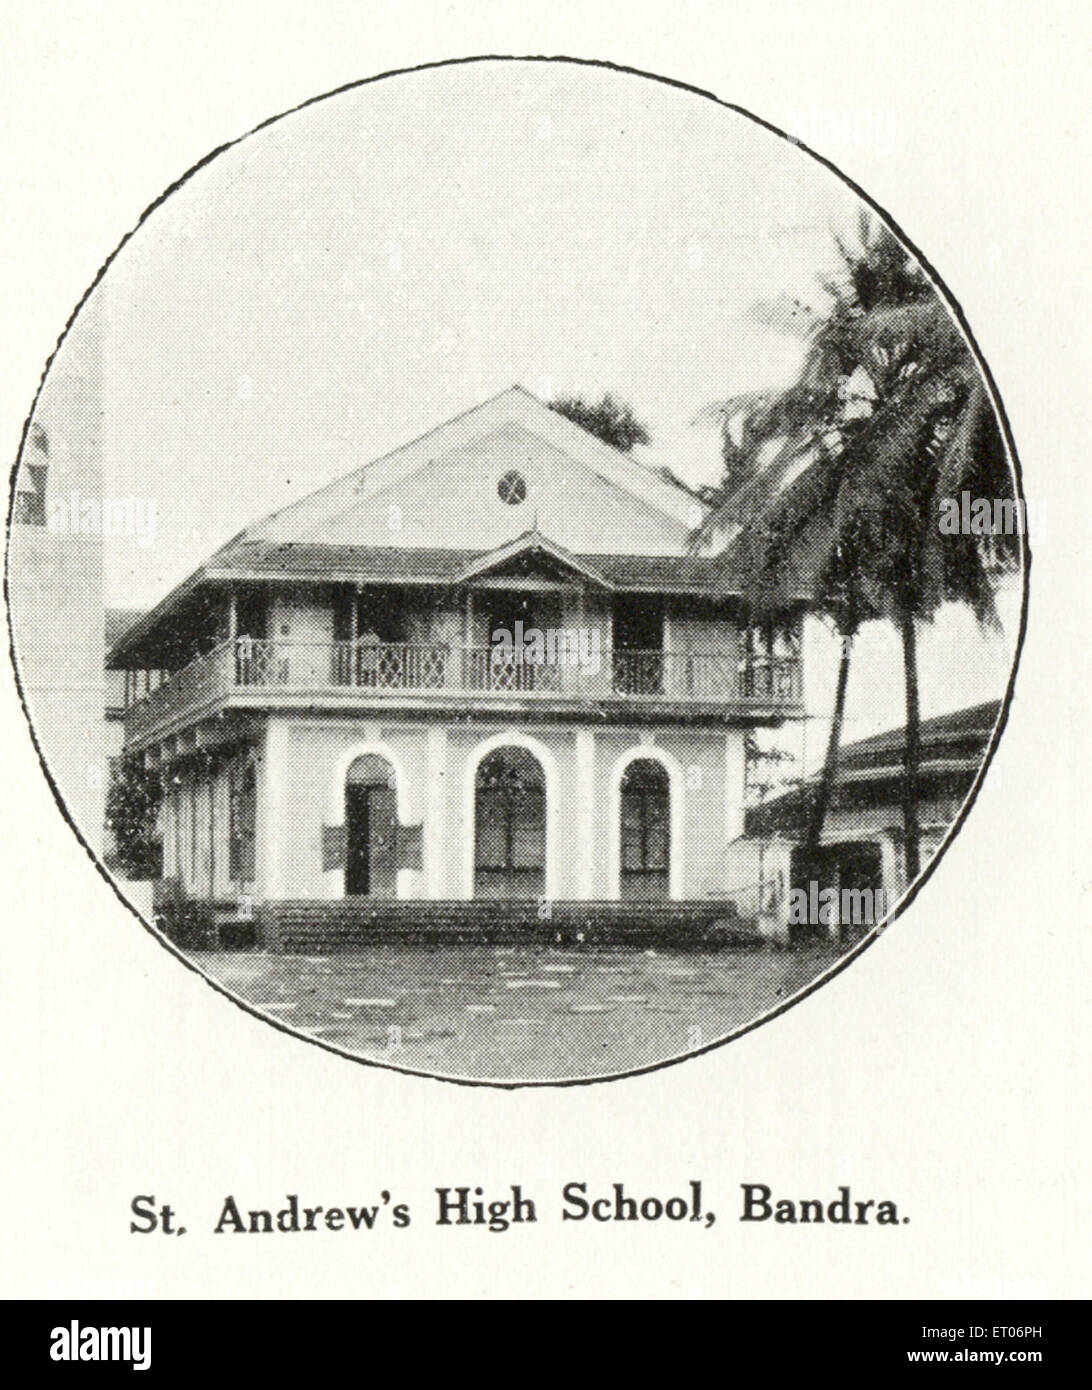 Katholische Gemeinde, St. Andrew's High School, Bandra, Bombay, Mumbai, Maharashtra, Indien, Asien, alte vintage 1800s Bild Stockfoto